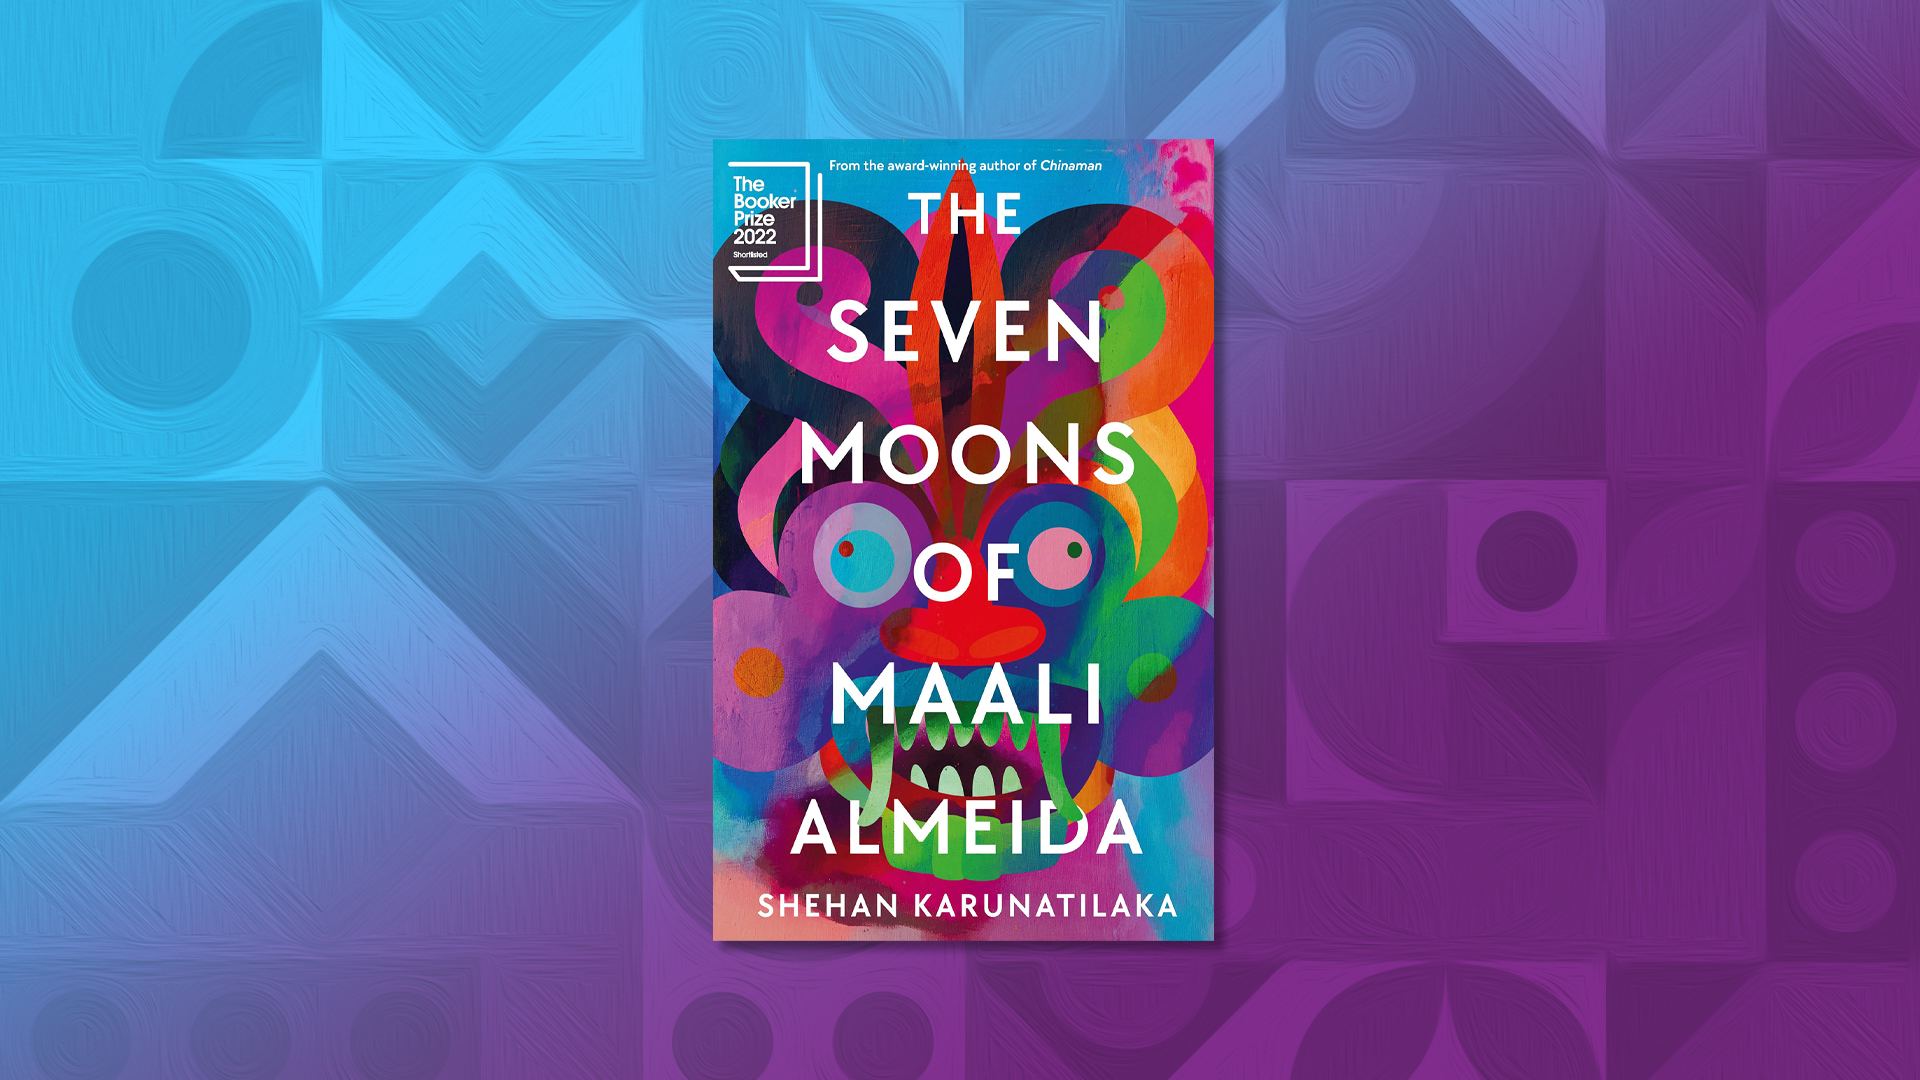 Fazi pubblicherà “Seven Moons of Maali Almeida” di Shehan Karunatilaka